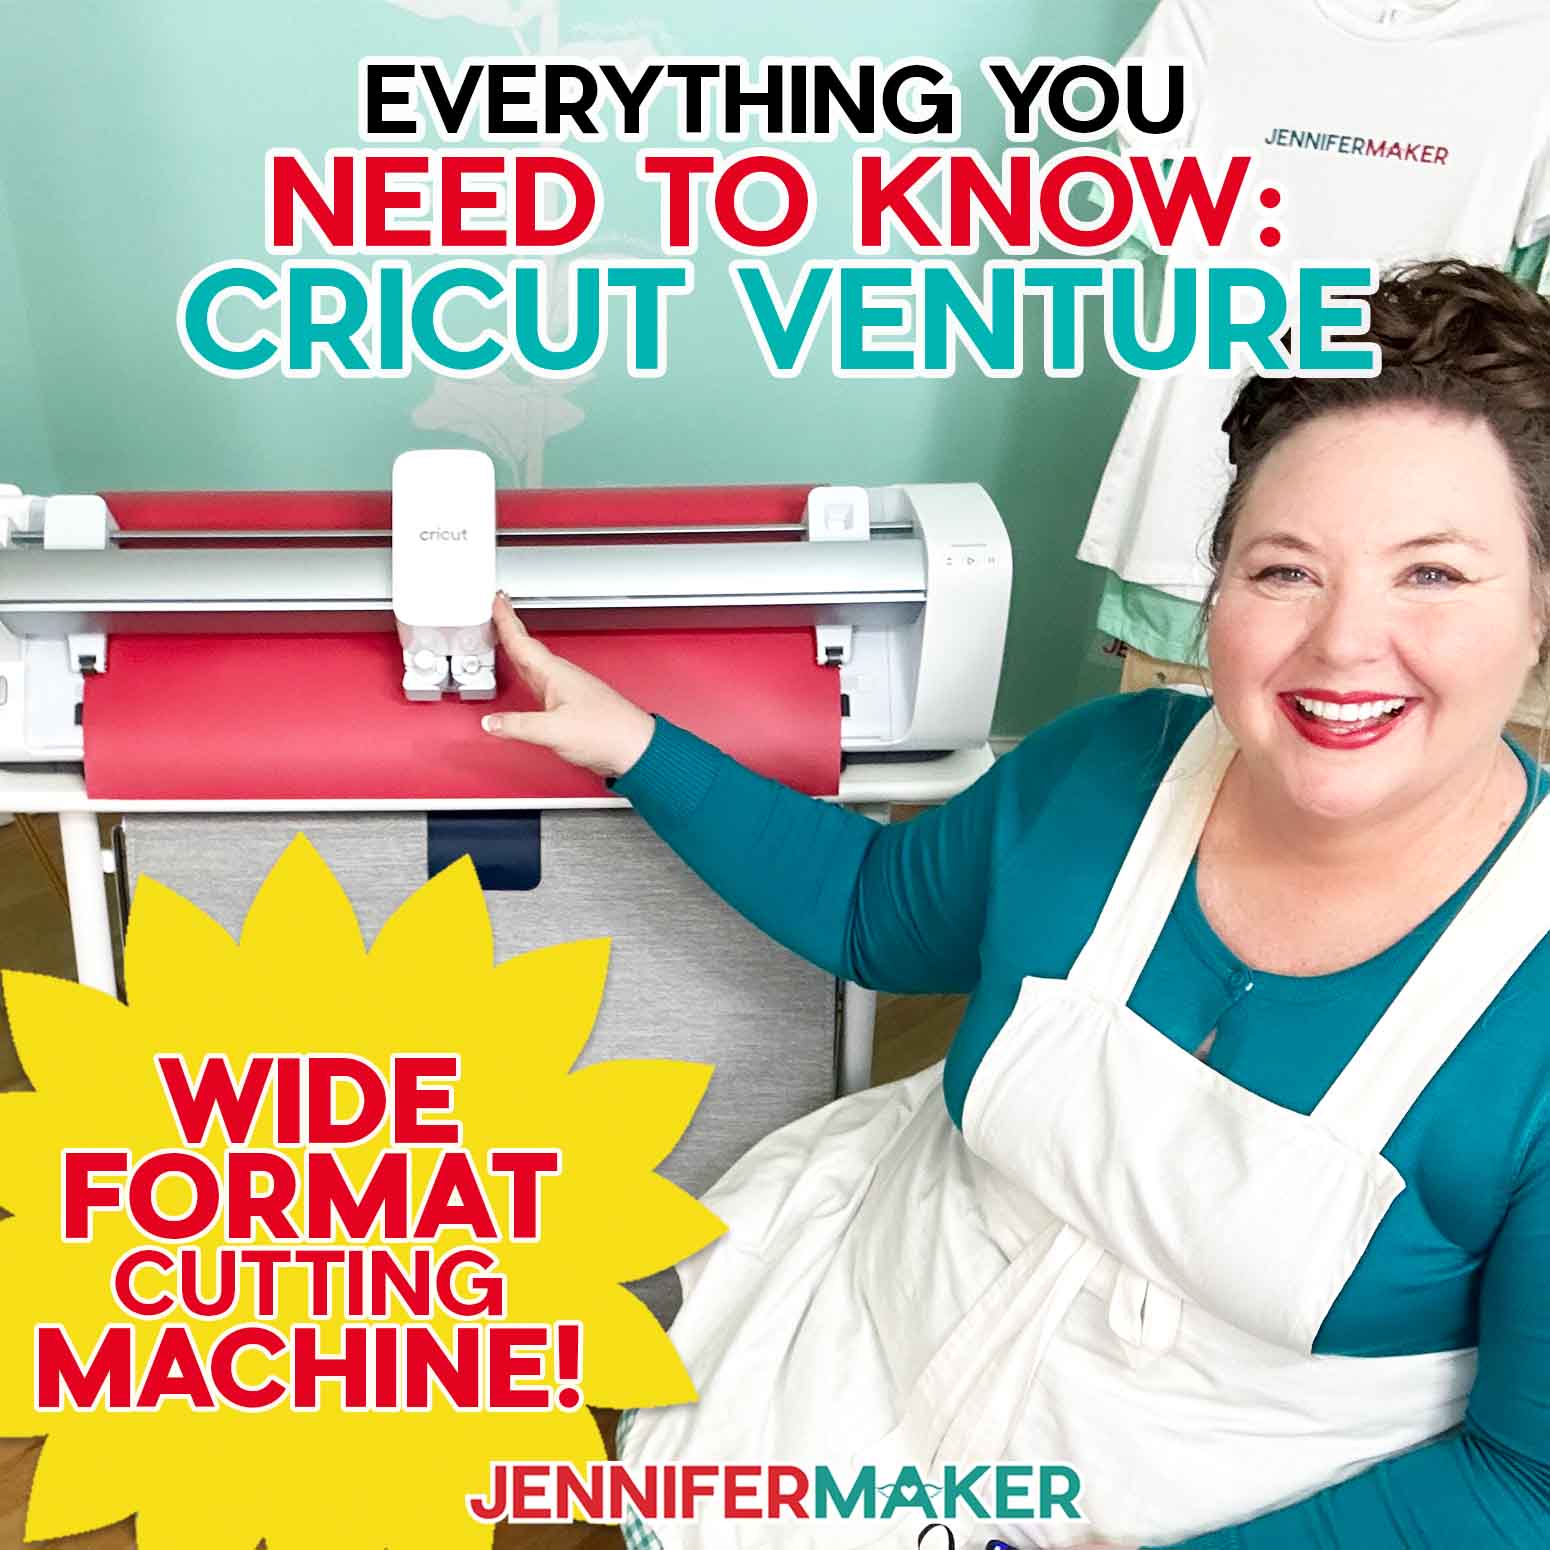 Jennifer Maker with the new Cricut Venture large format cutting machine.